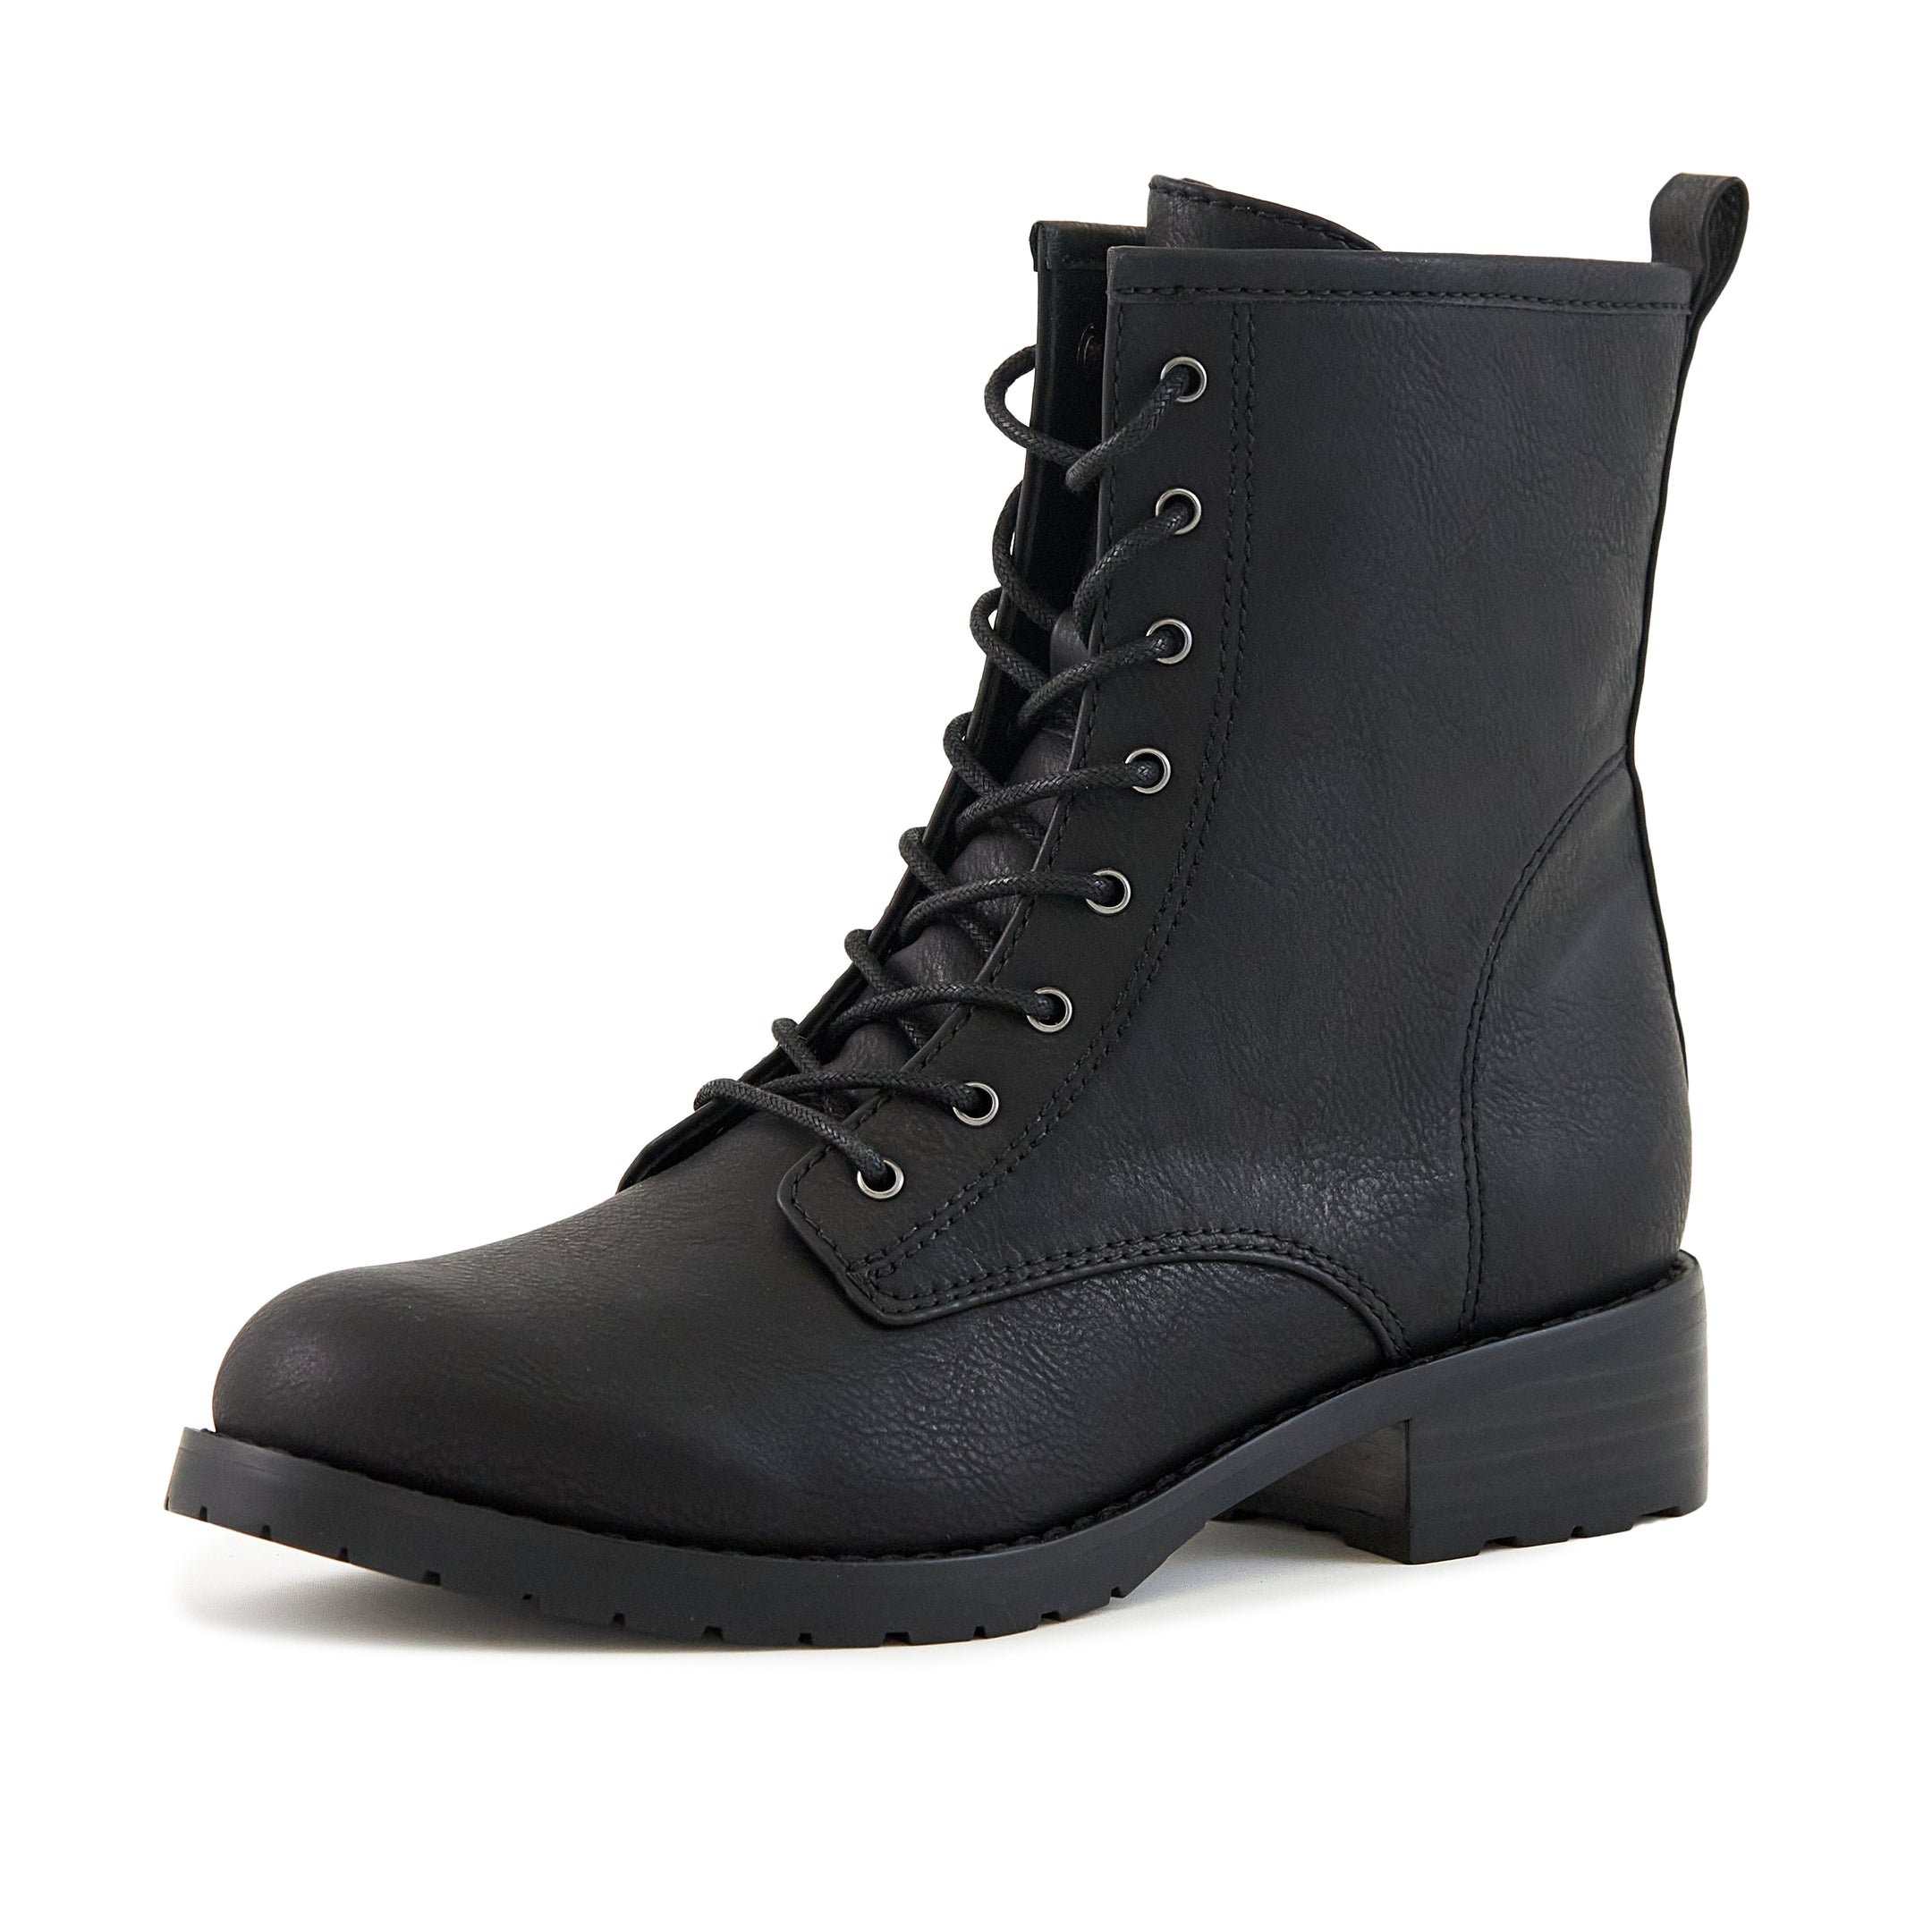 Buy Women's Combat Boots Black by Nest Shoes